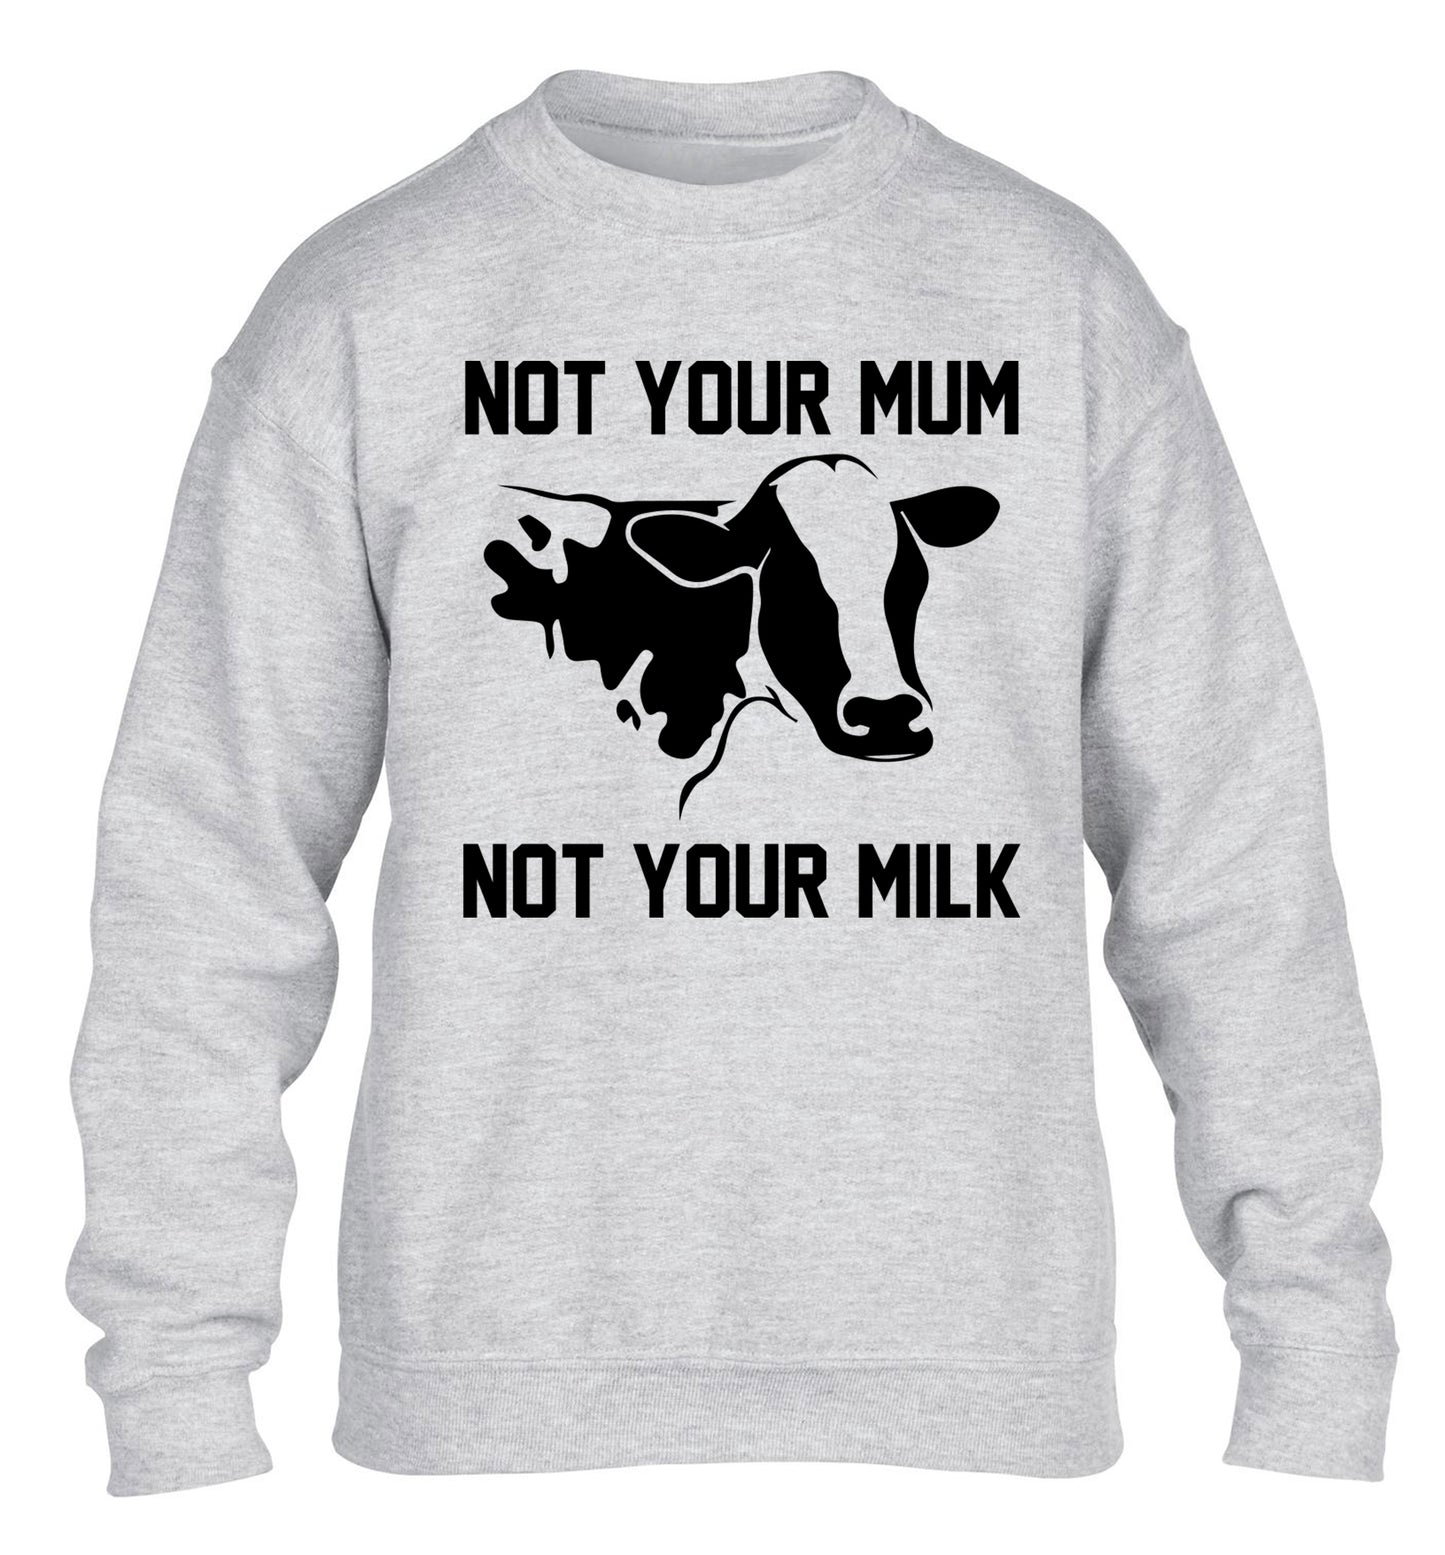 Not your mum not your milk children's grey sweater 12-14 Years